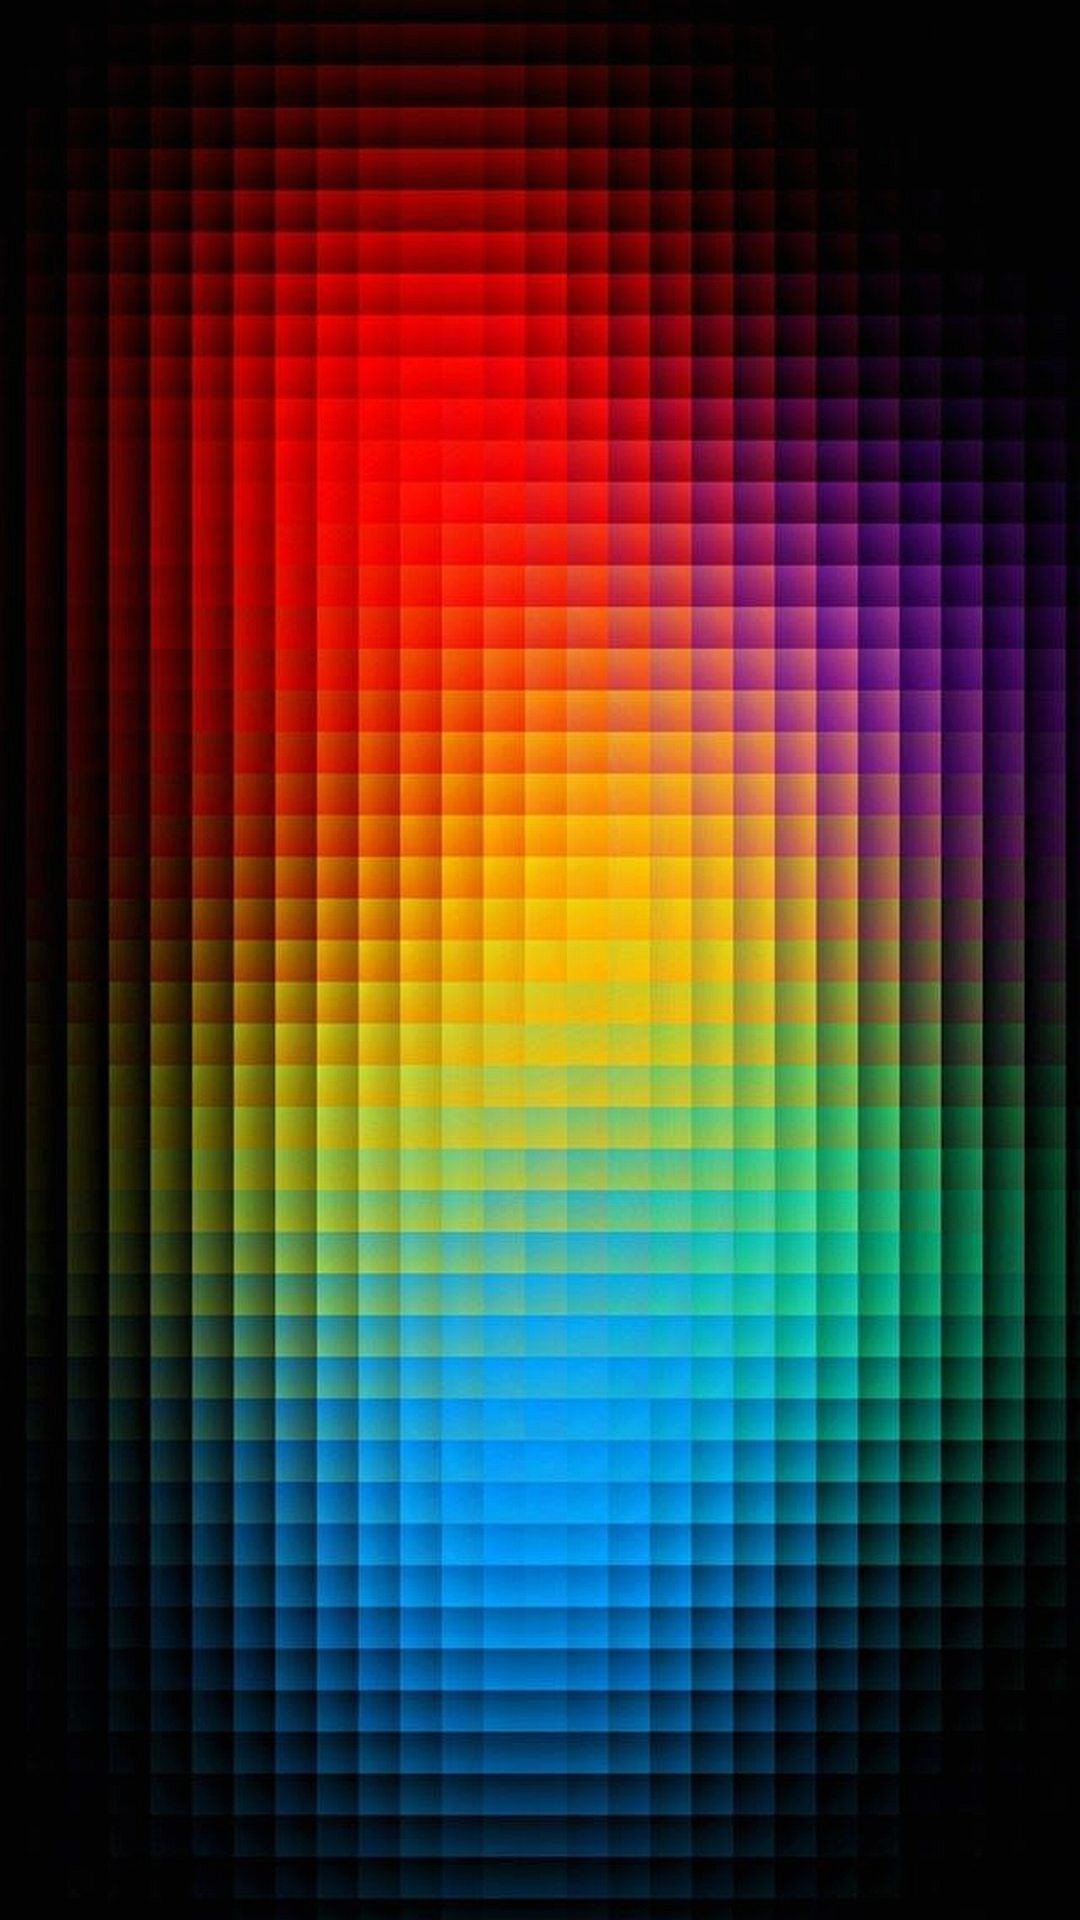 1080x1920 Wallpaper Samsung Galaxy A7 Colorful 1080 1920 170